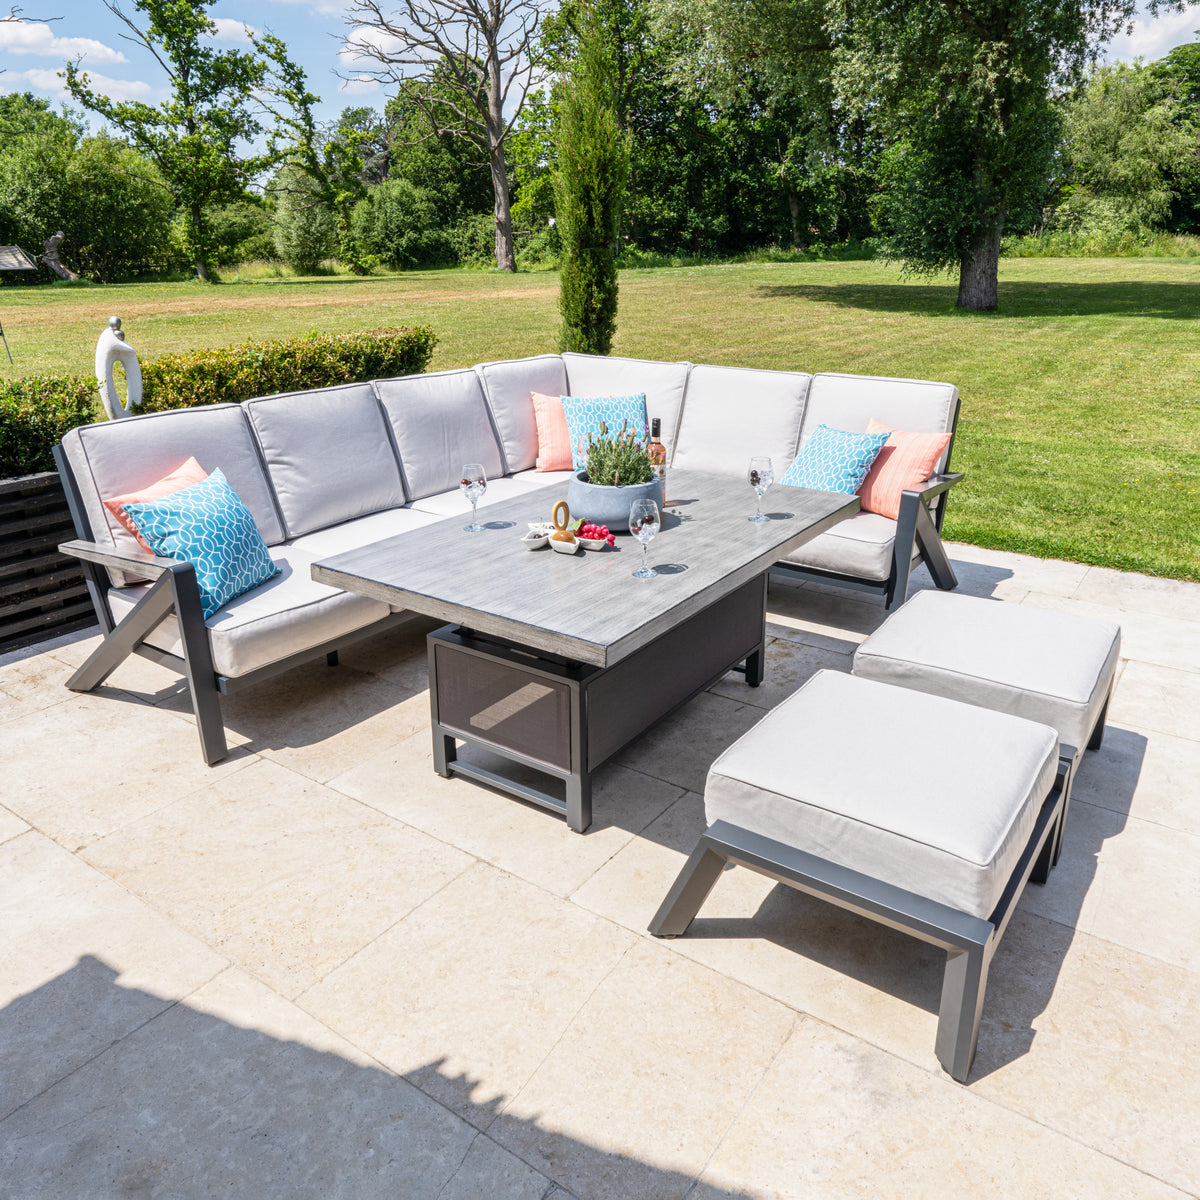 Bracken Outdoors Calgary Corner Sofa Garden Furniture Set with Height Adjustable Table